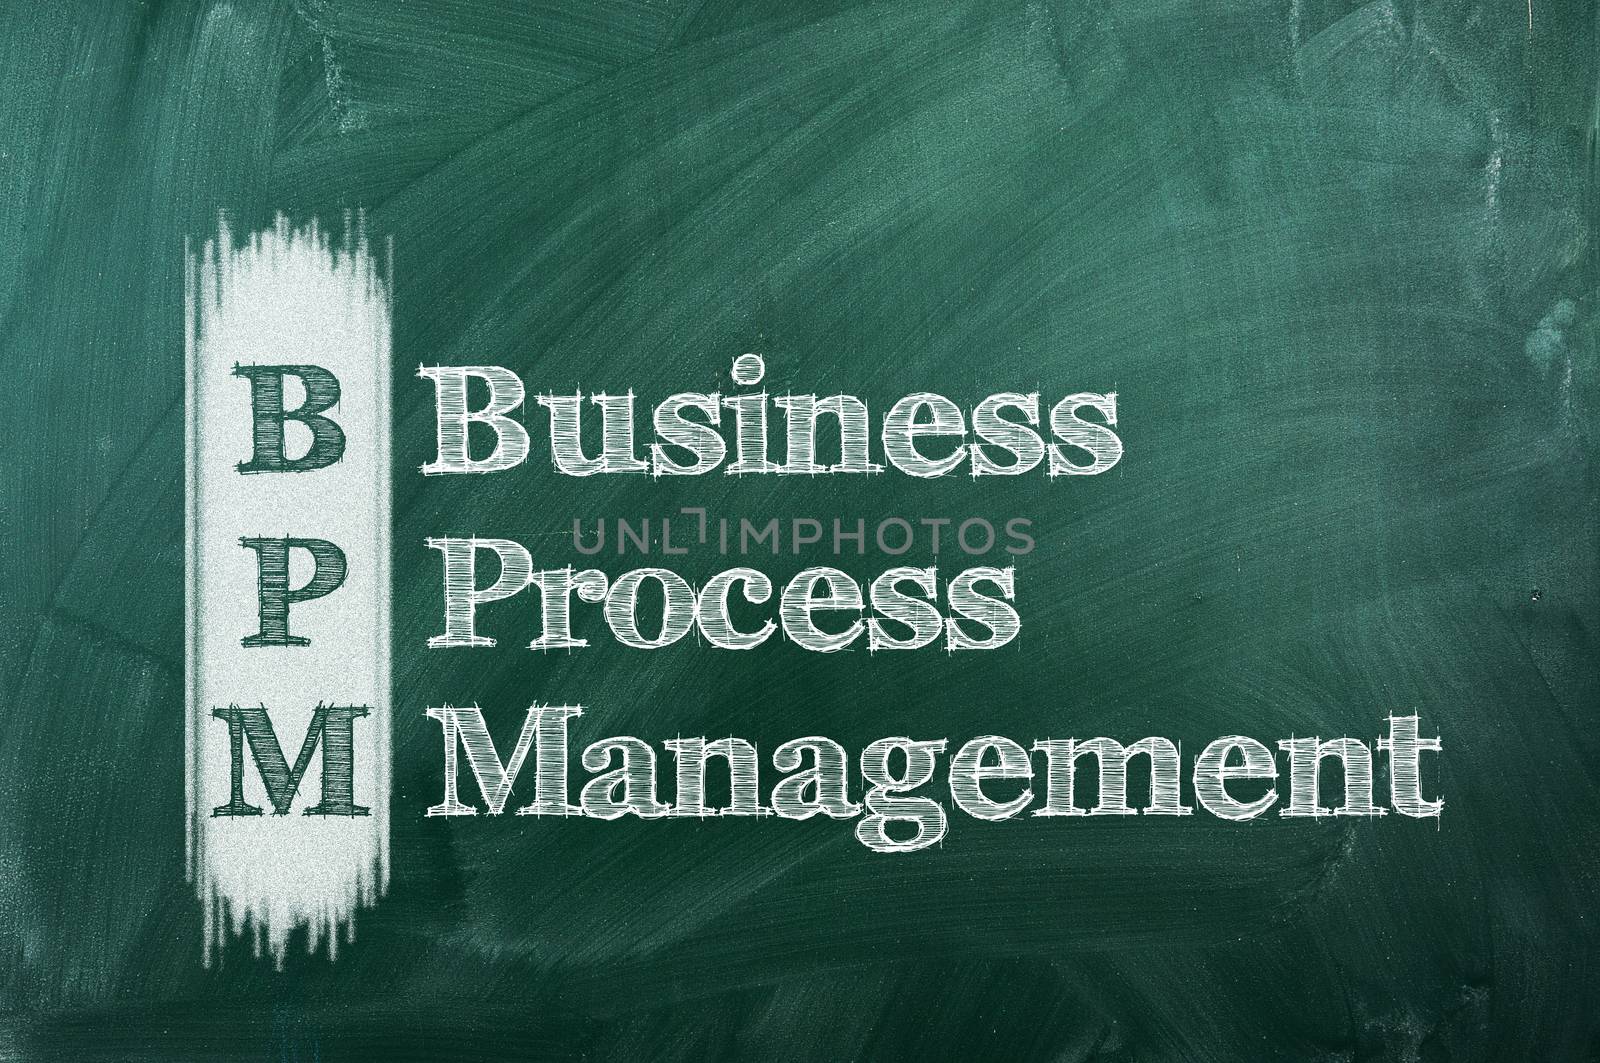 BPM business process management  on a green chalkboard